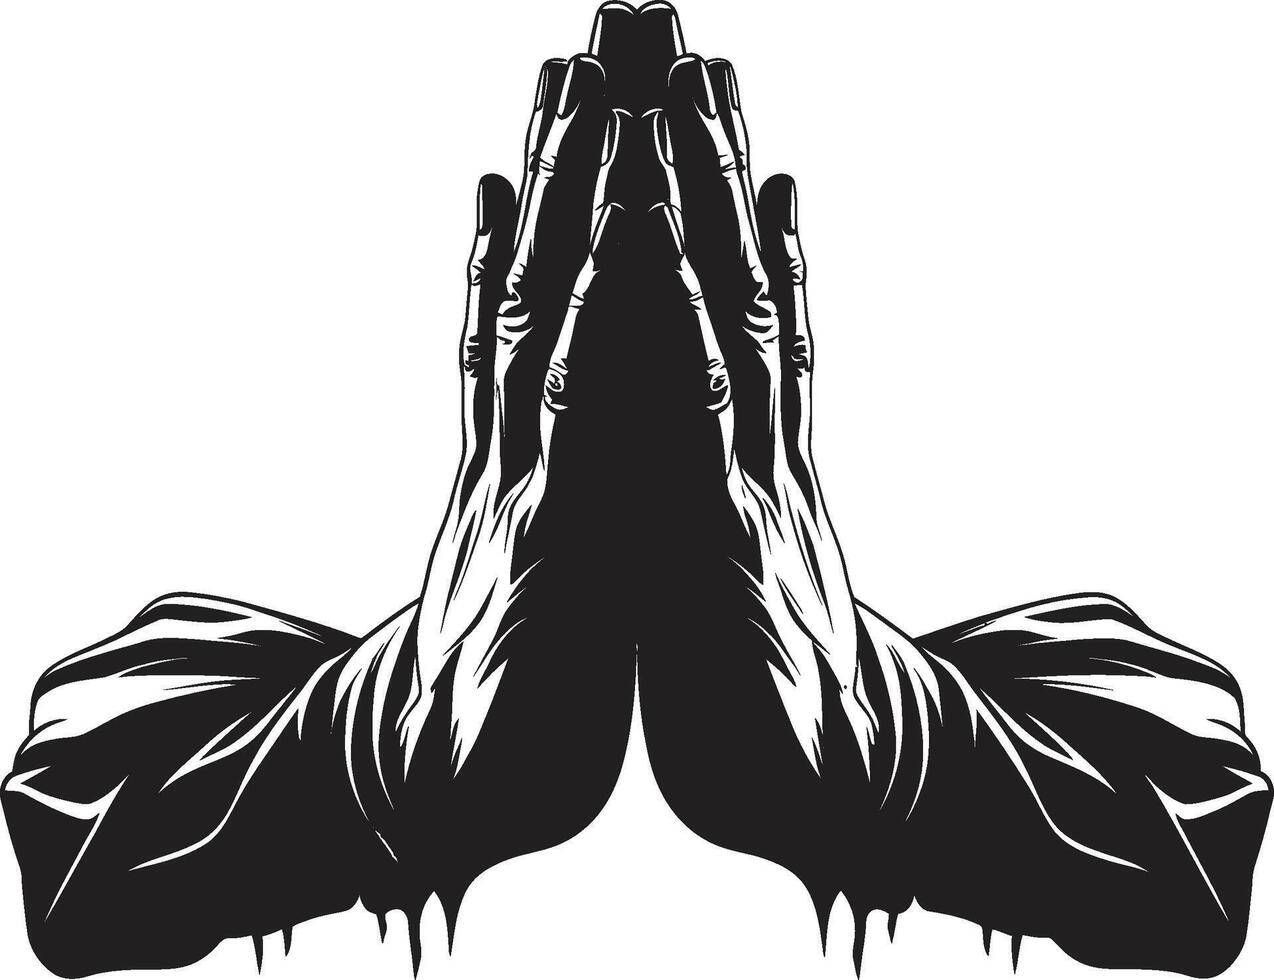 Prayerful Presence Monochrome Praying Hands in 80 Words Sacred Symbolism Praying Hands Black in Brilliance vector